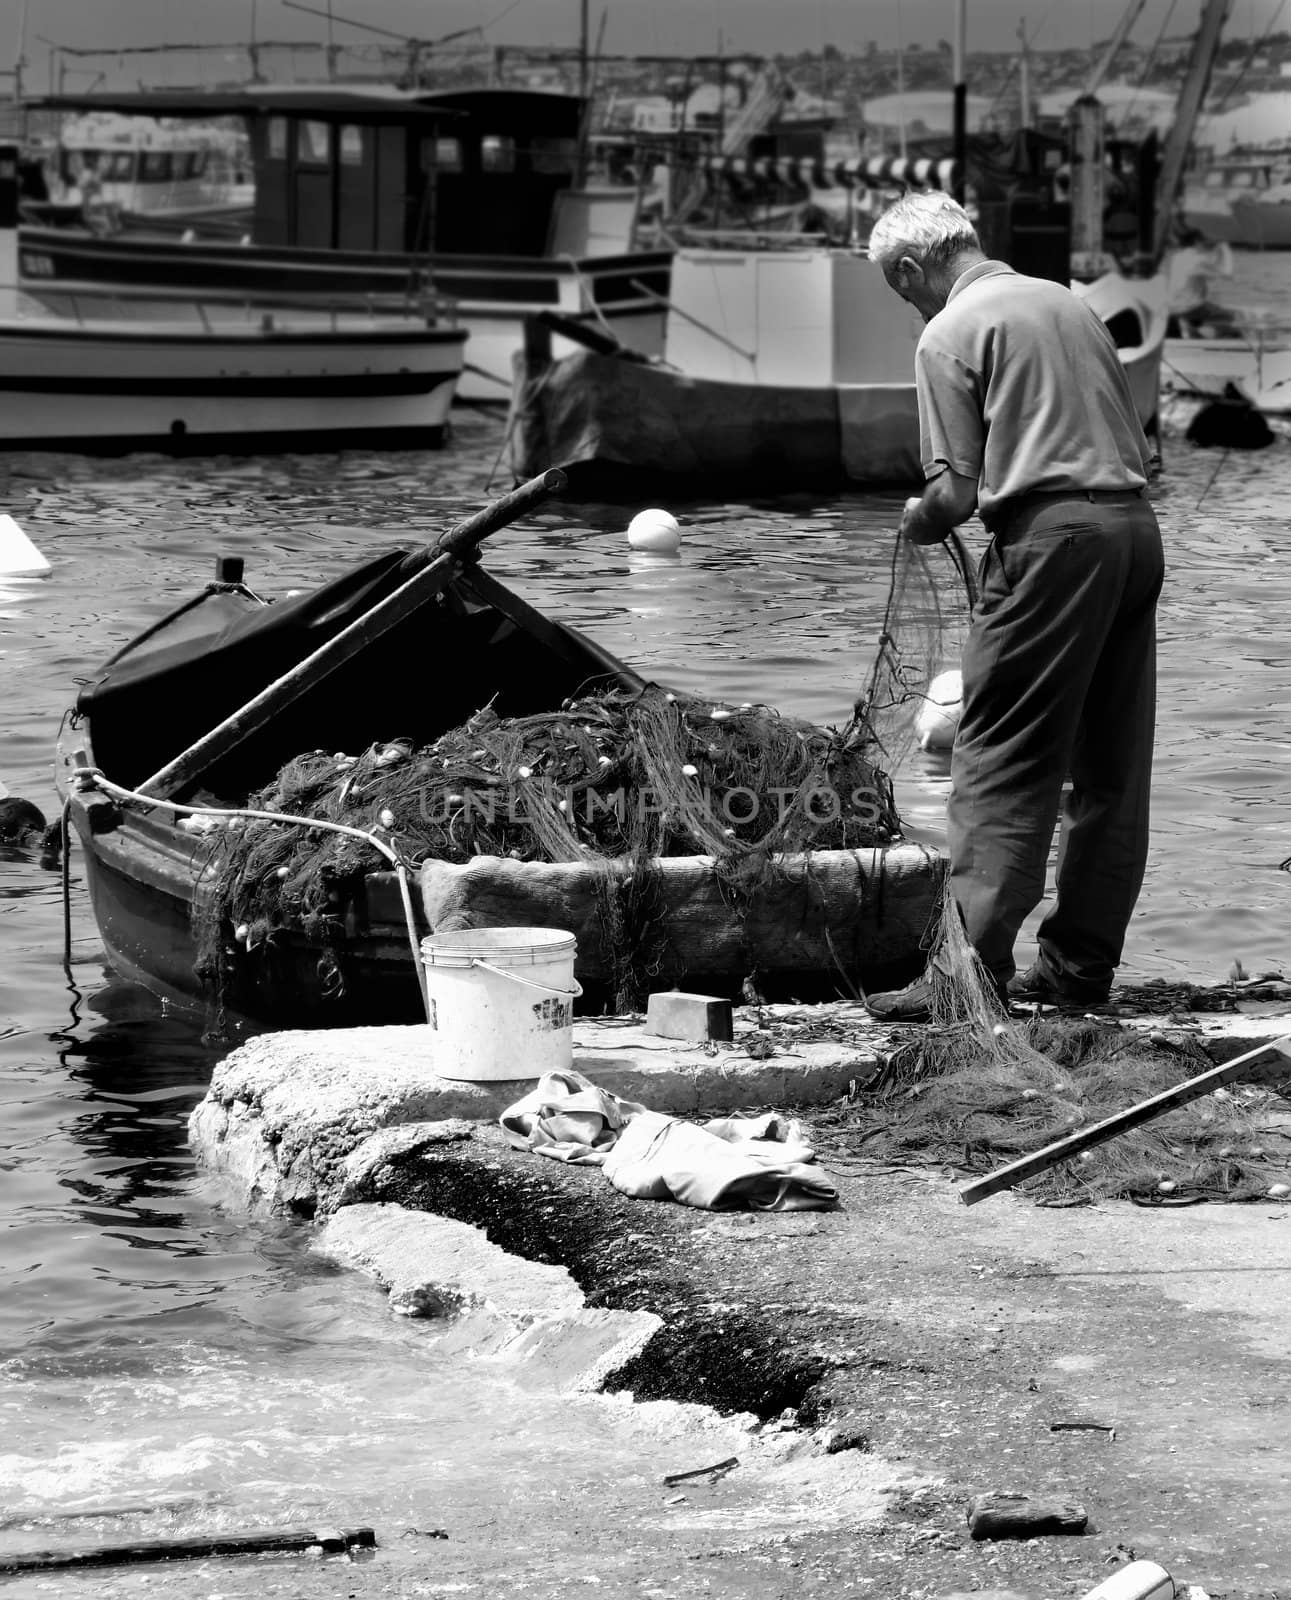 Old fisherman fixing his nets at the fishing village of Marsaxlokk in Malta